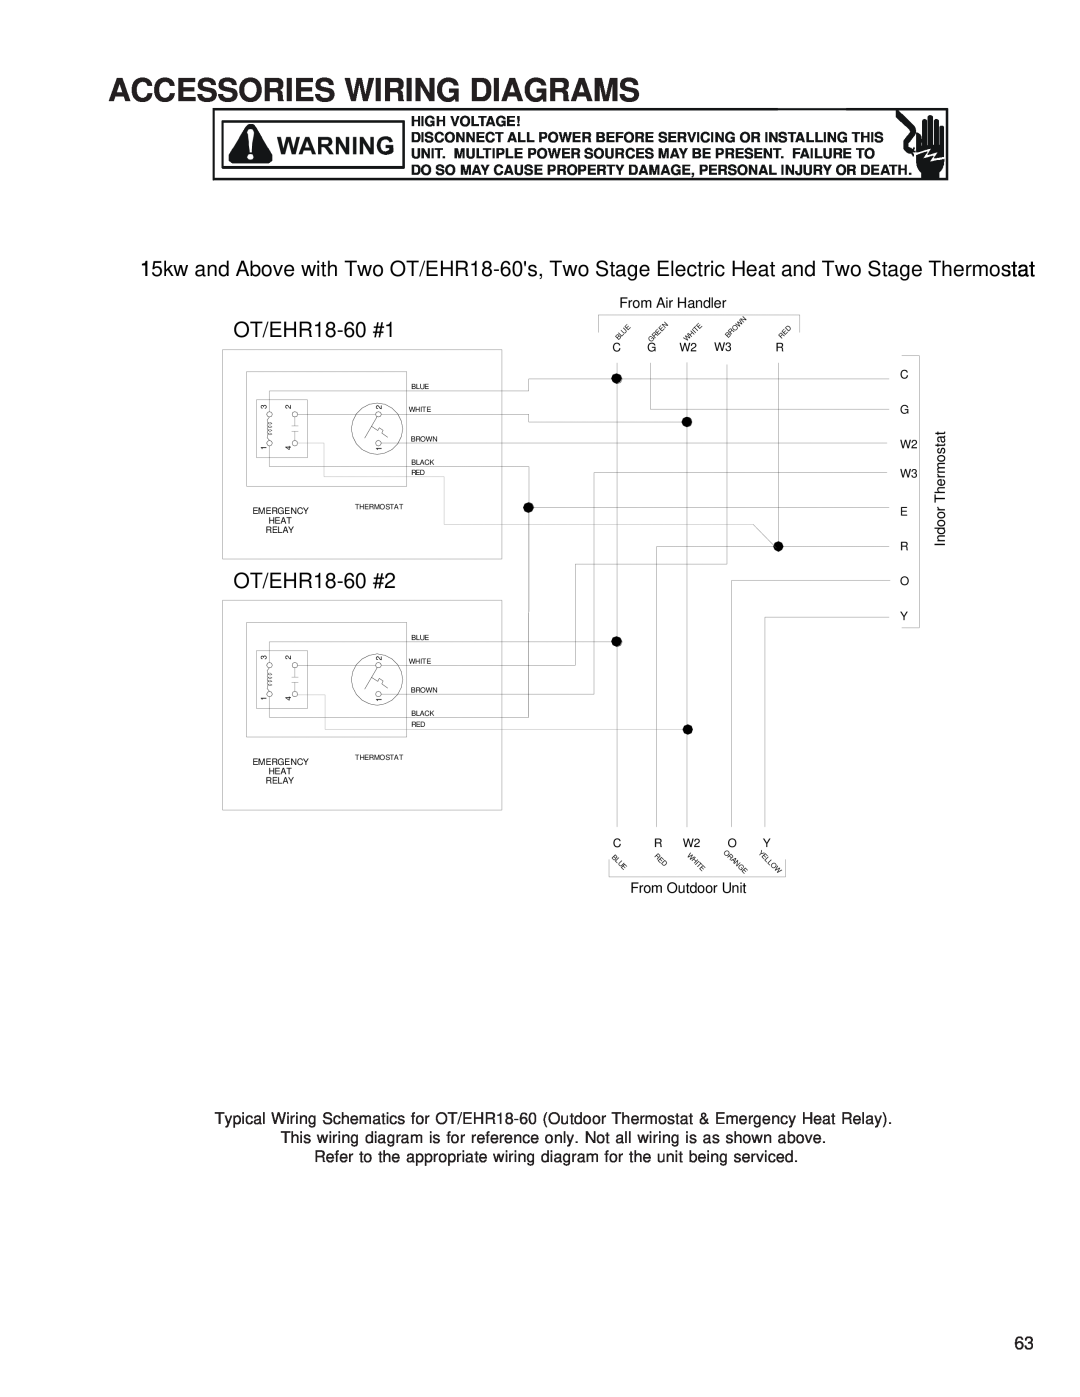 Goodman Mfg RT6100004R13 manual OT/EHR18-60#1, OT/EHR18-60#2, Accessories Wiring Diagrams 